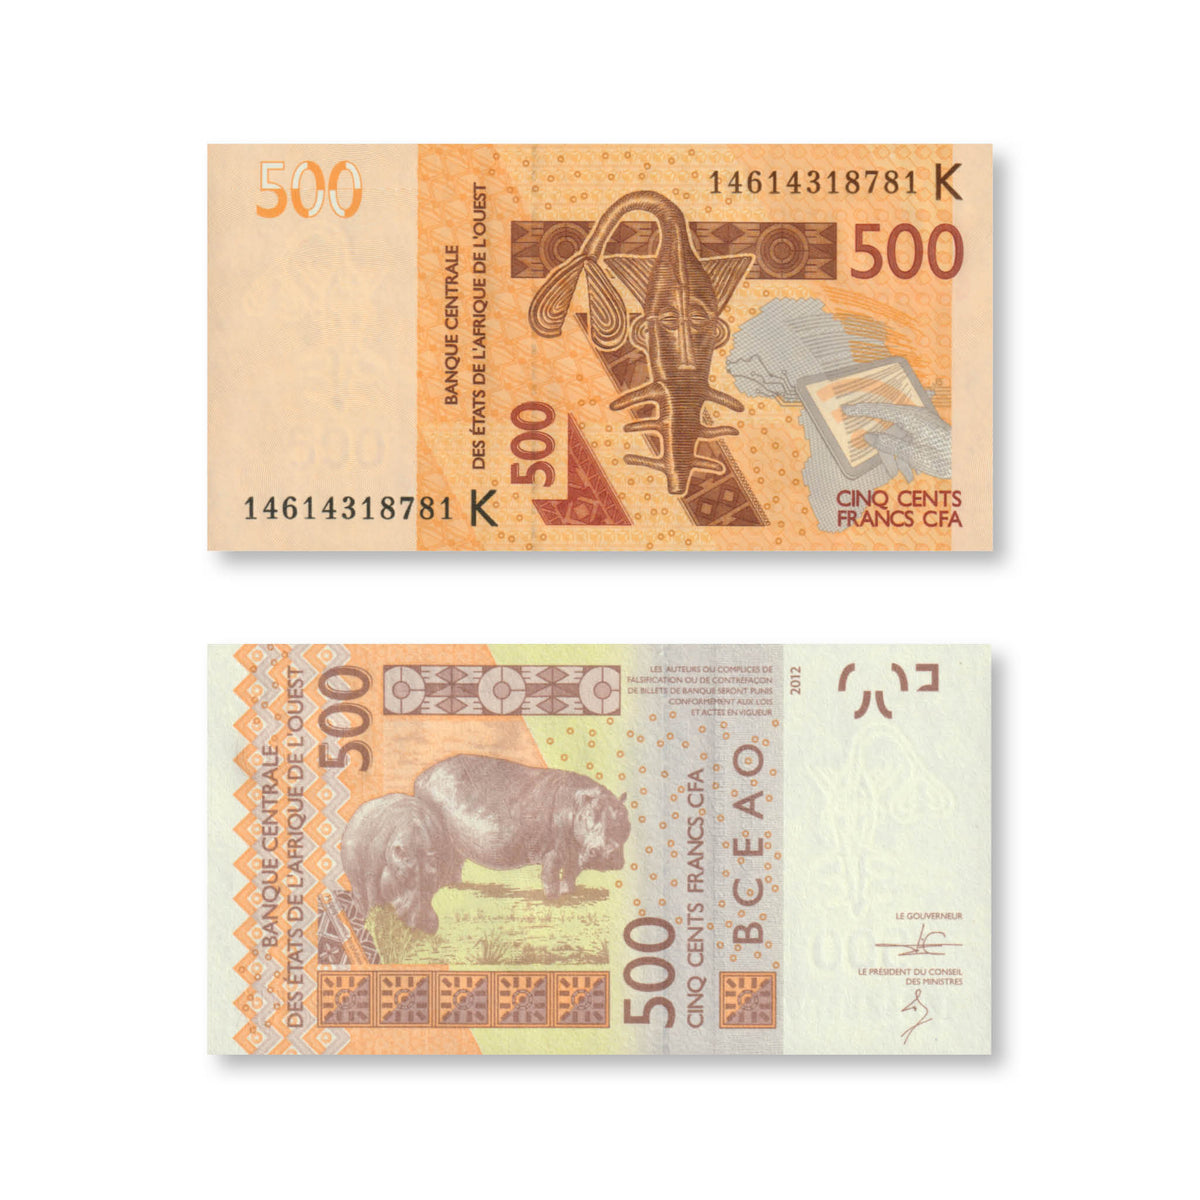 West African States, Senegal, 500 Francs, 2014, B120Kc, P719Kc, UNC - Robert's World Money - World Banknotes